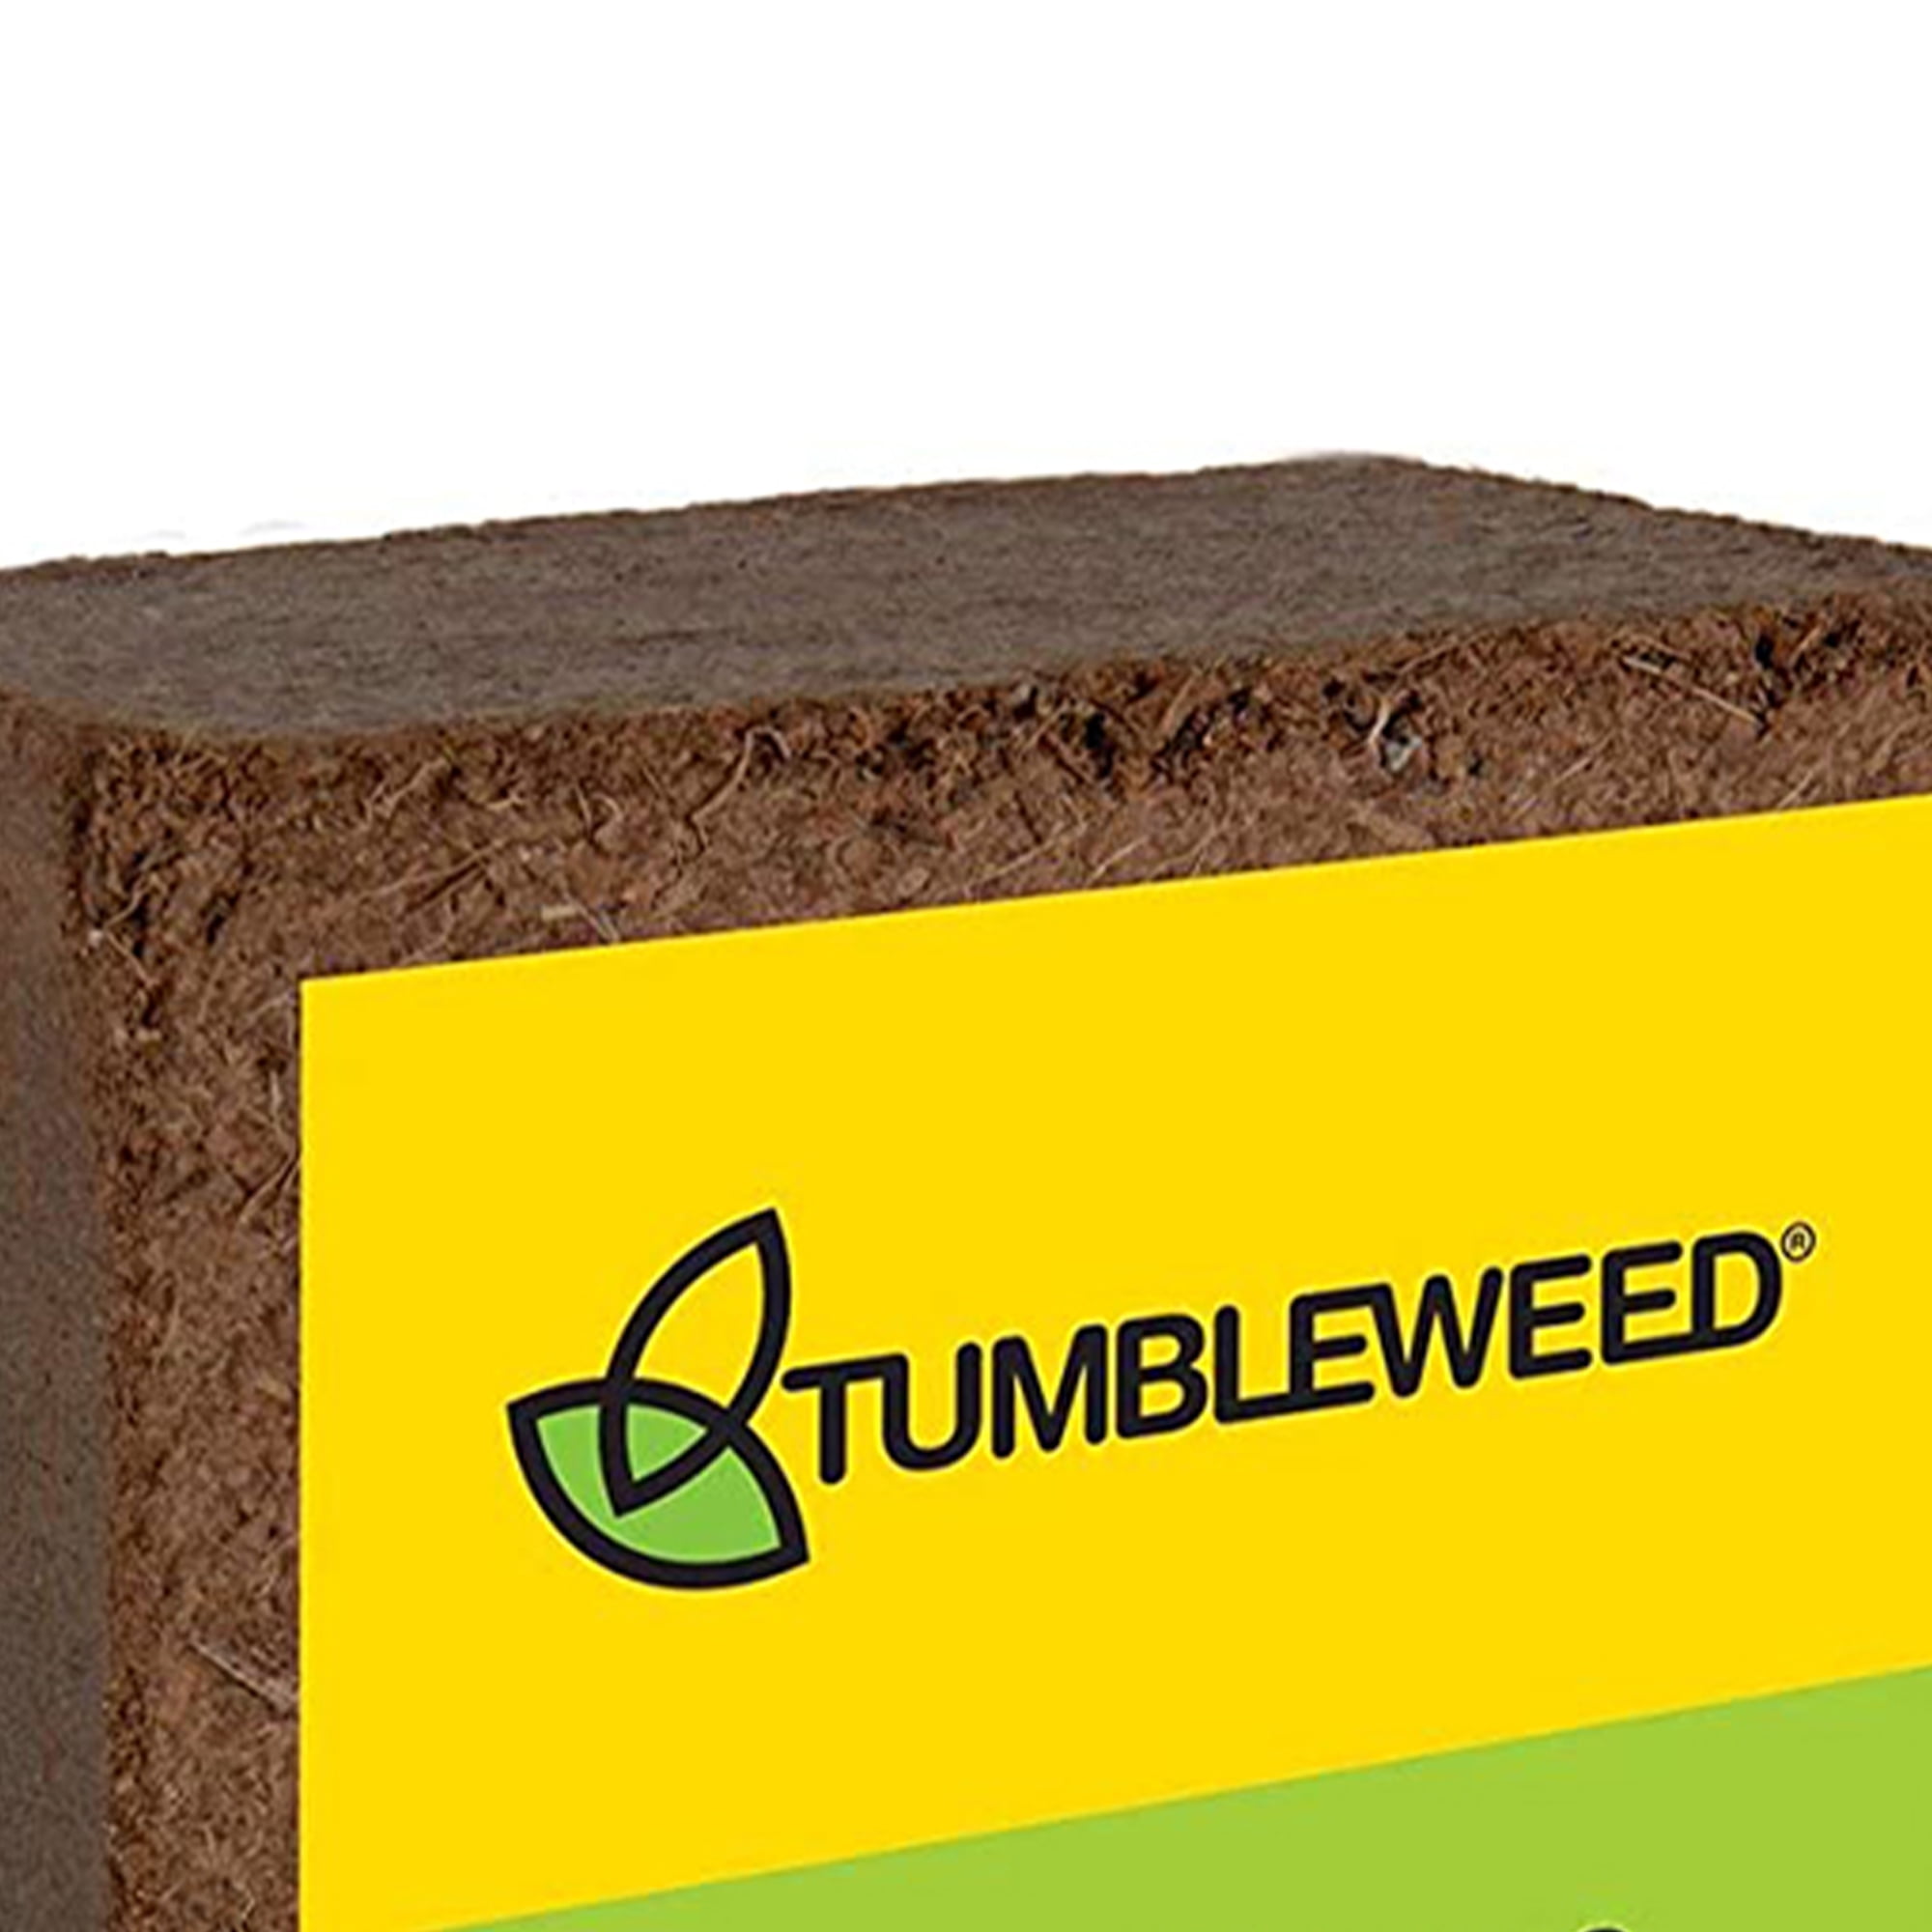 Tumbleweed Worm Farm Growing Bedding Block All Natural Coconut Fiber Coir Brick 